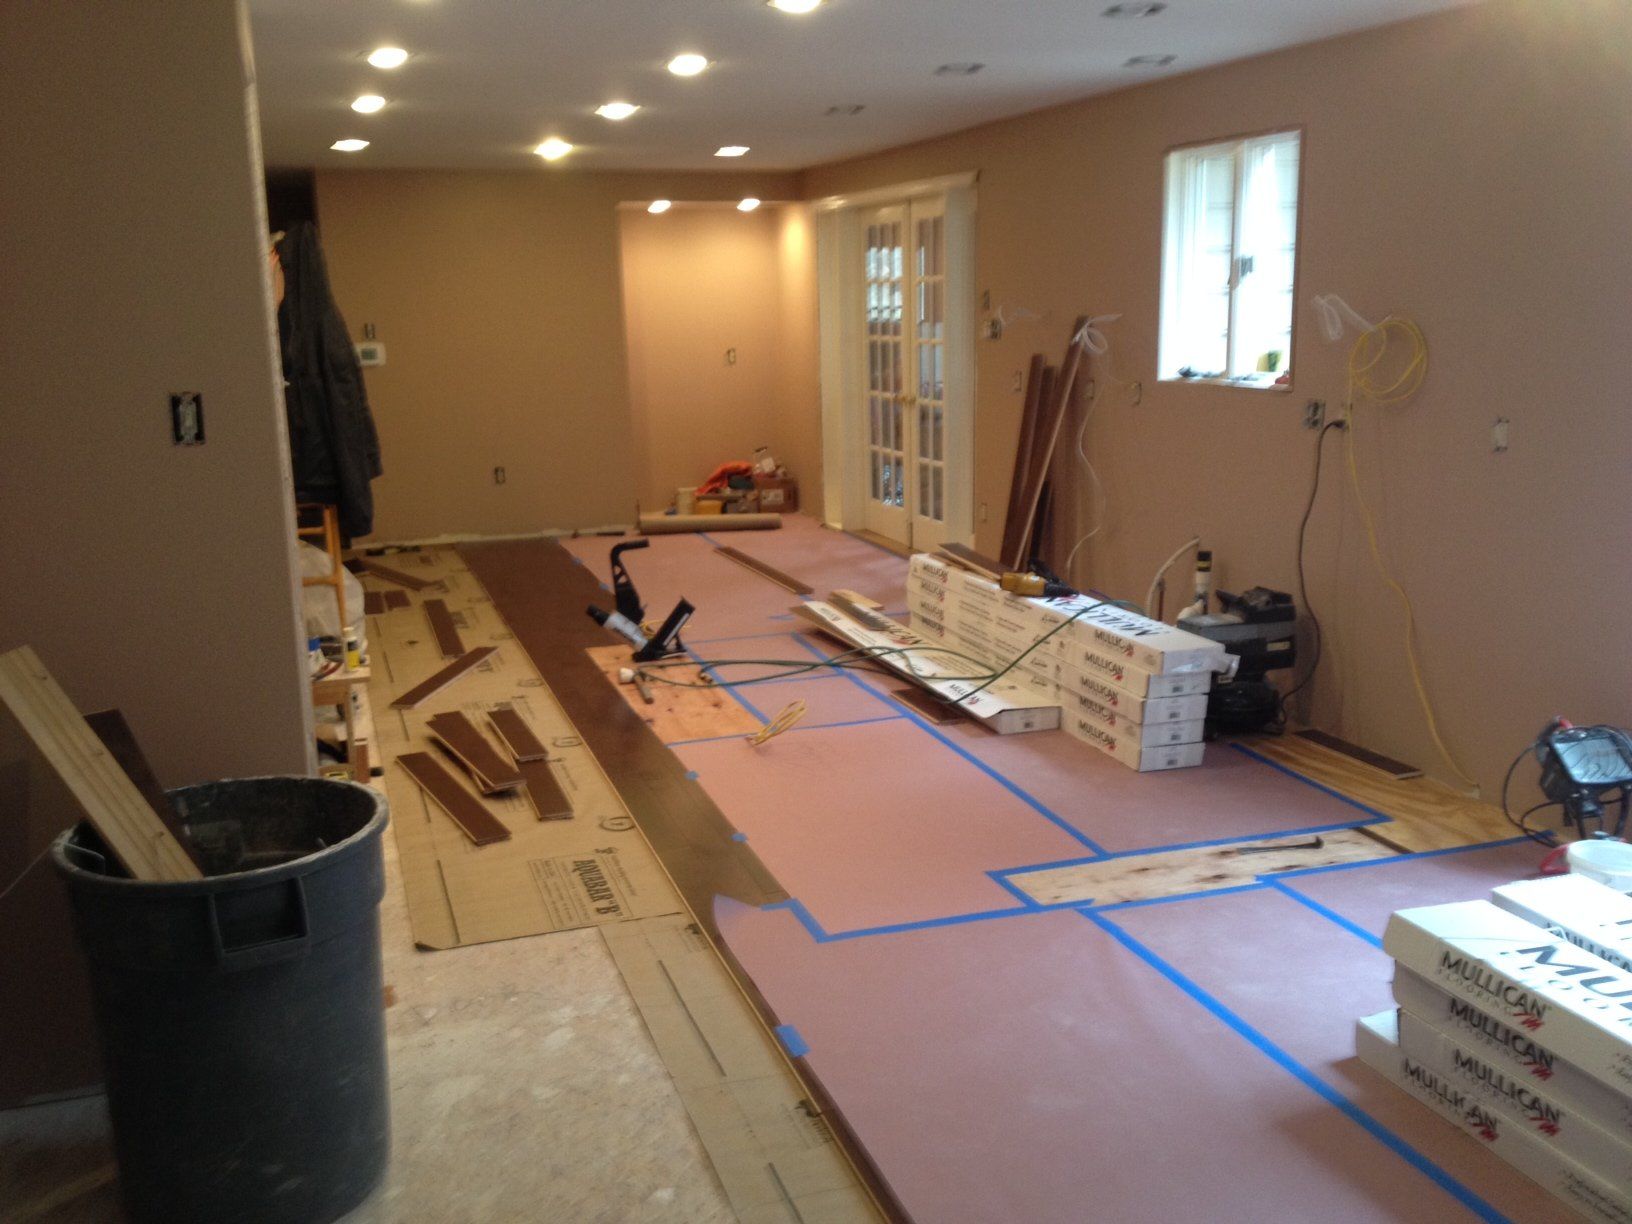 Kitchen Construction 01 - Home Improvement Services in Glen Arm, MD